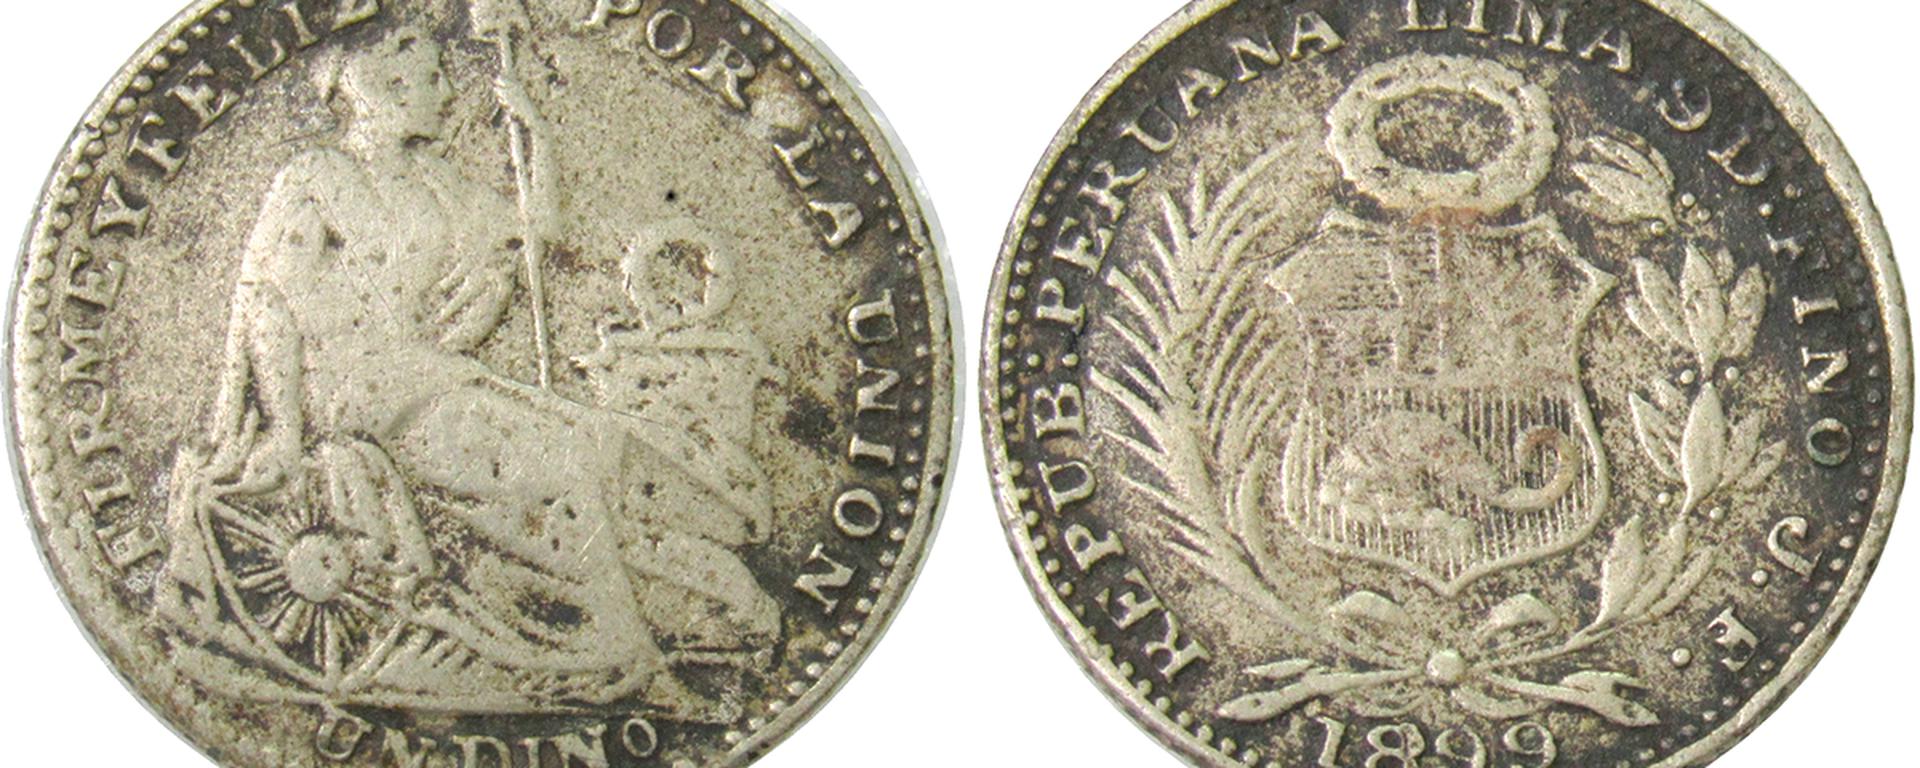 La historia del dino, una moneda falsa de 1899